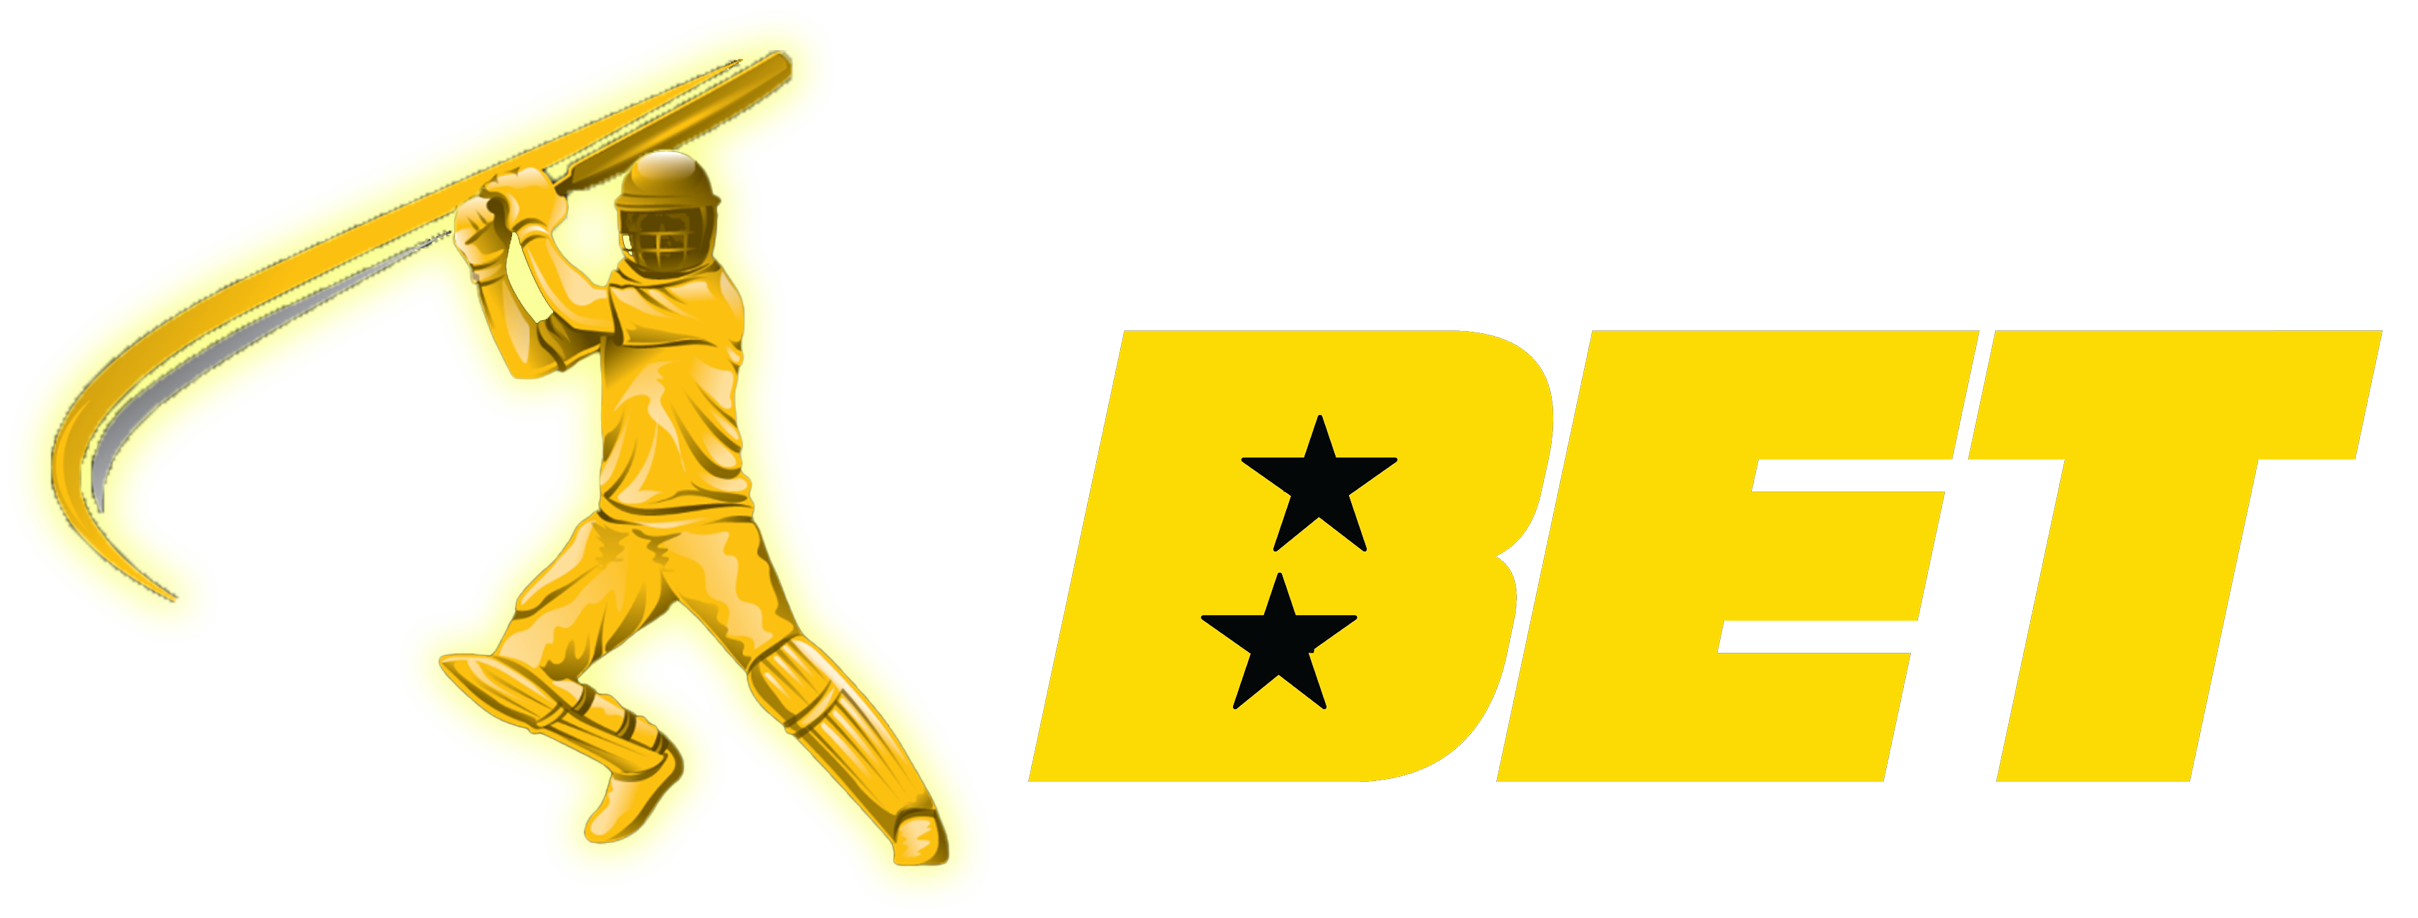 logo for Bat ball bet online casino site